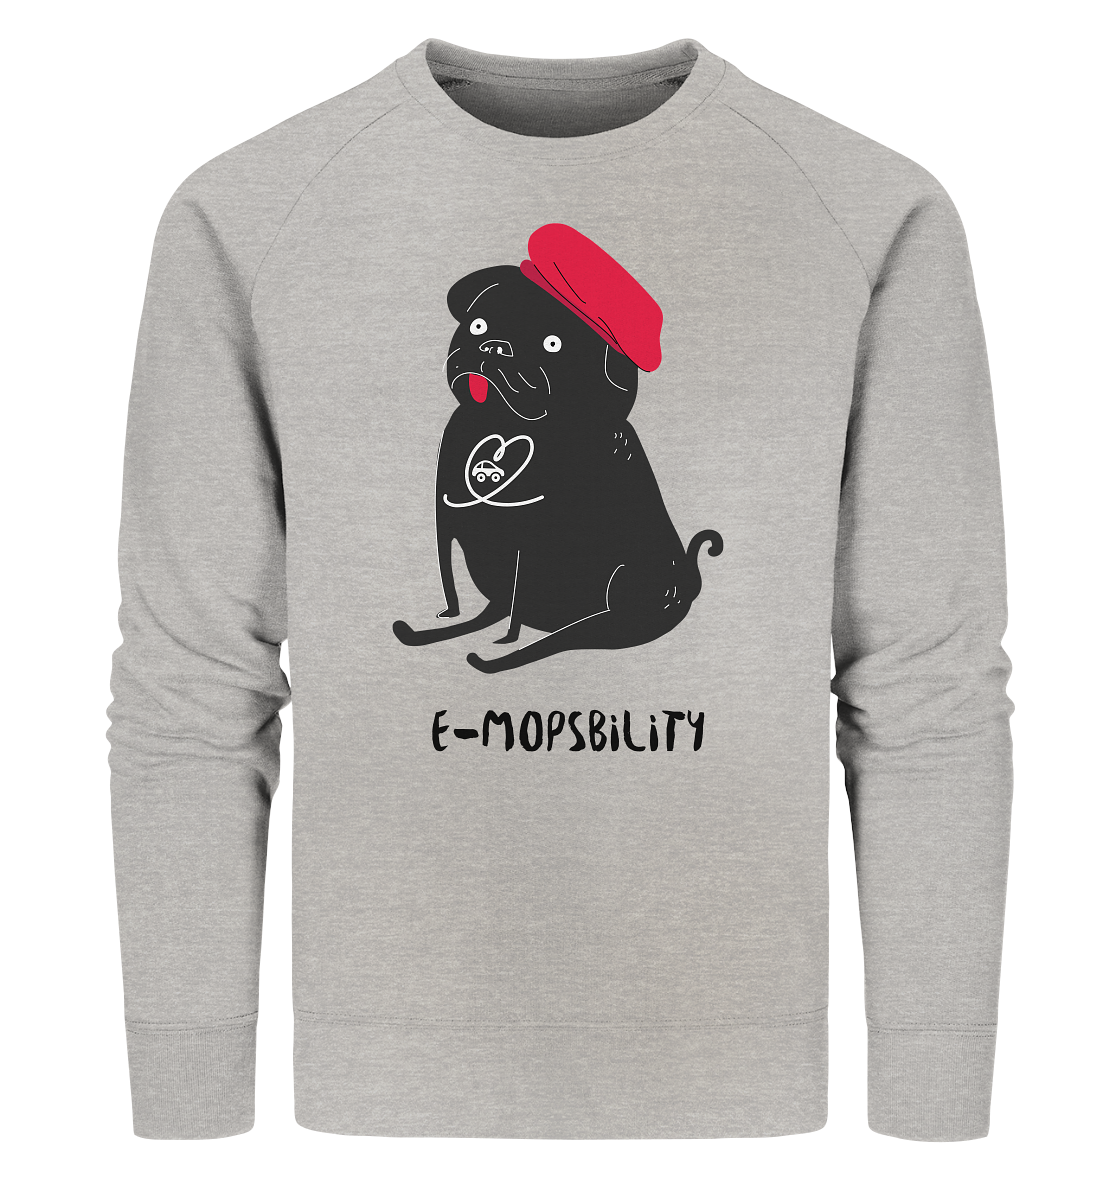 E-Mopsbility ORGANIC - Organic Sweatshirt